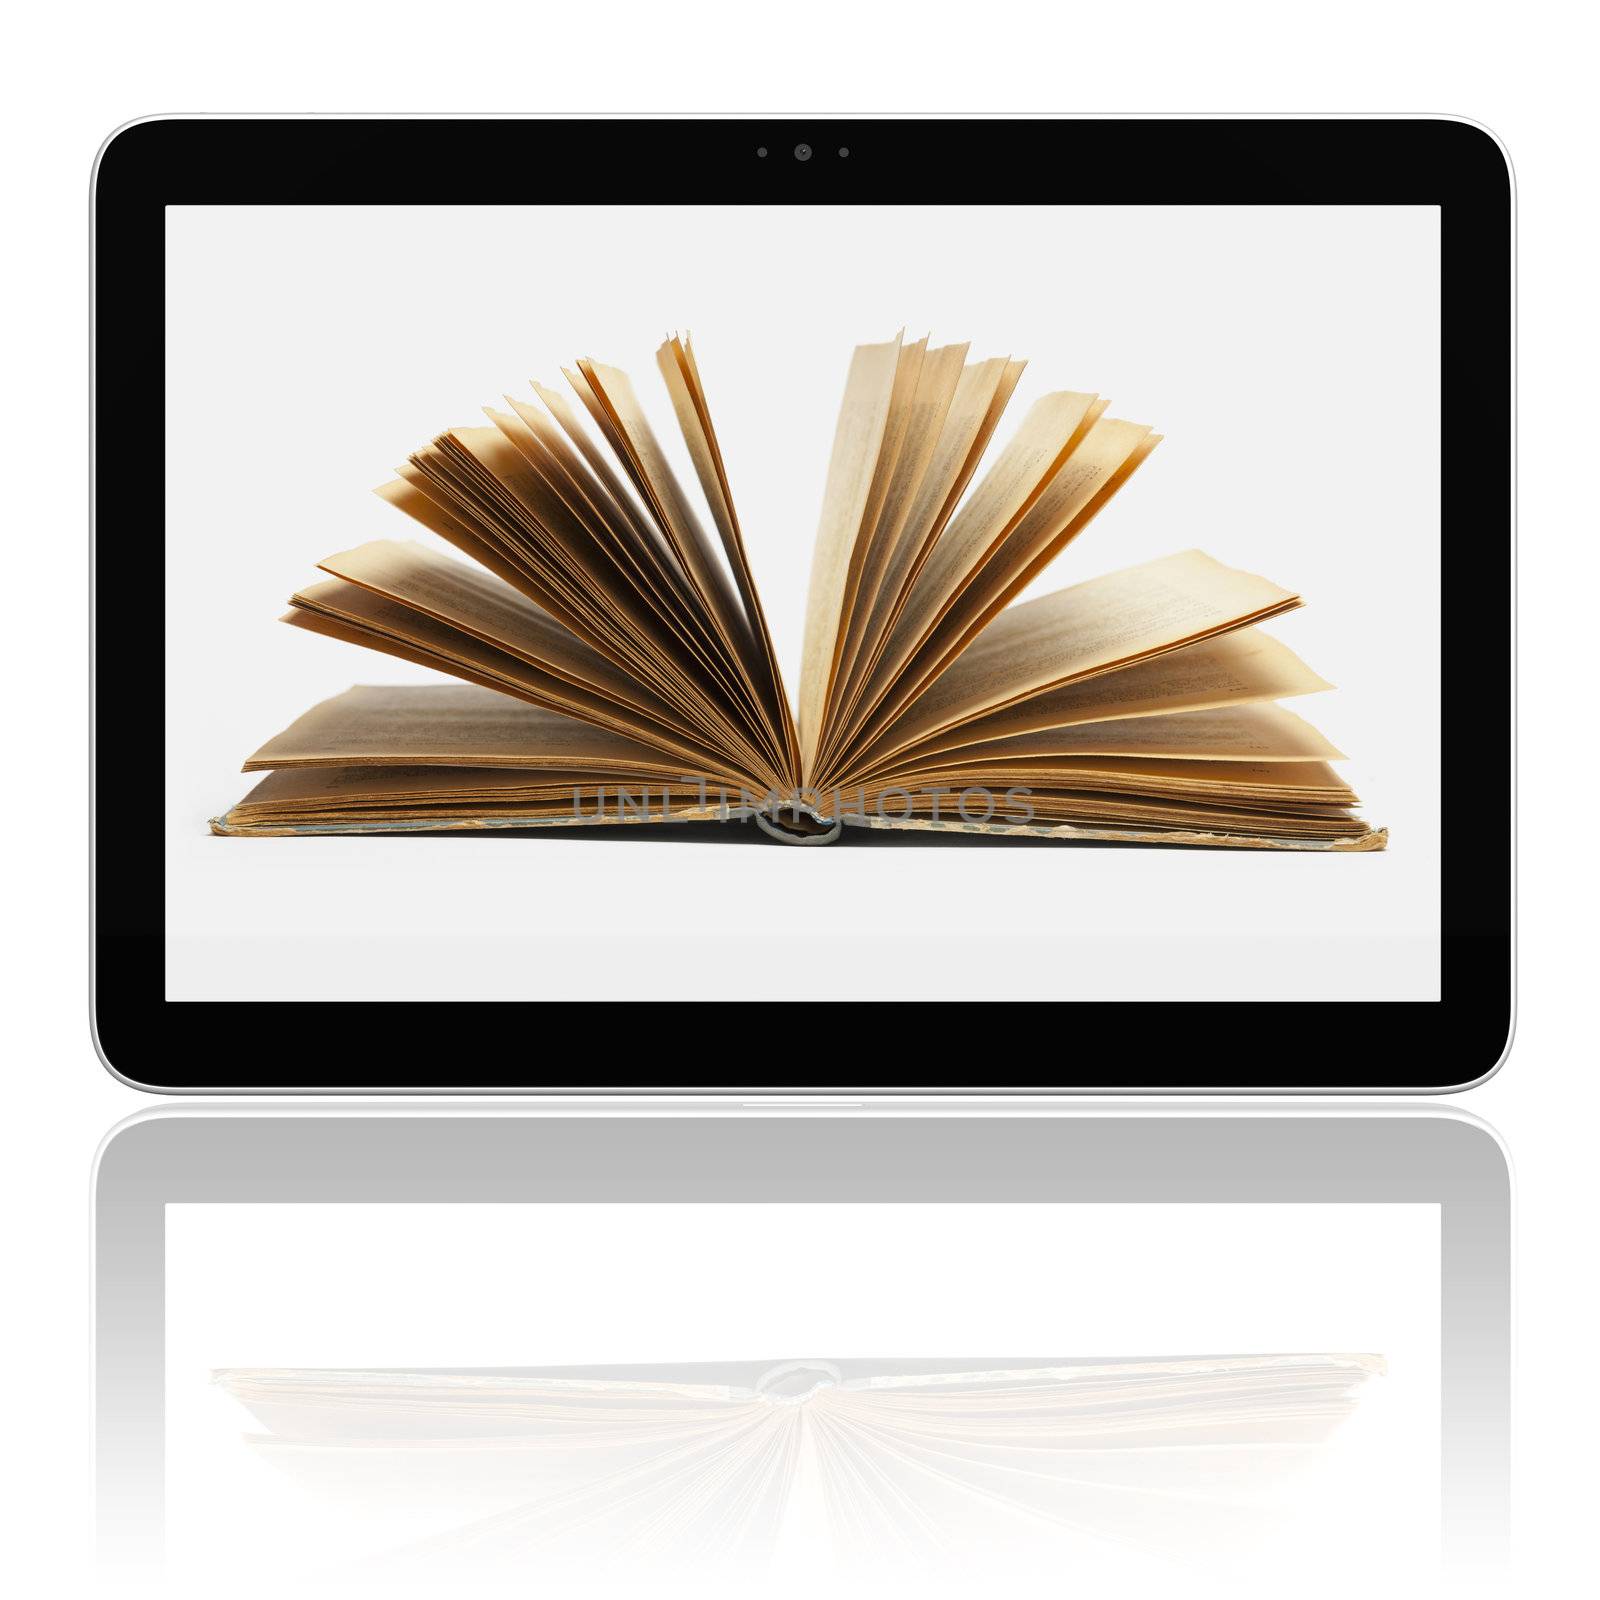 E-book E-reader Tablet Computer by adamr